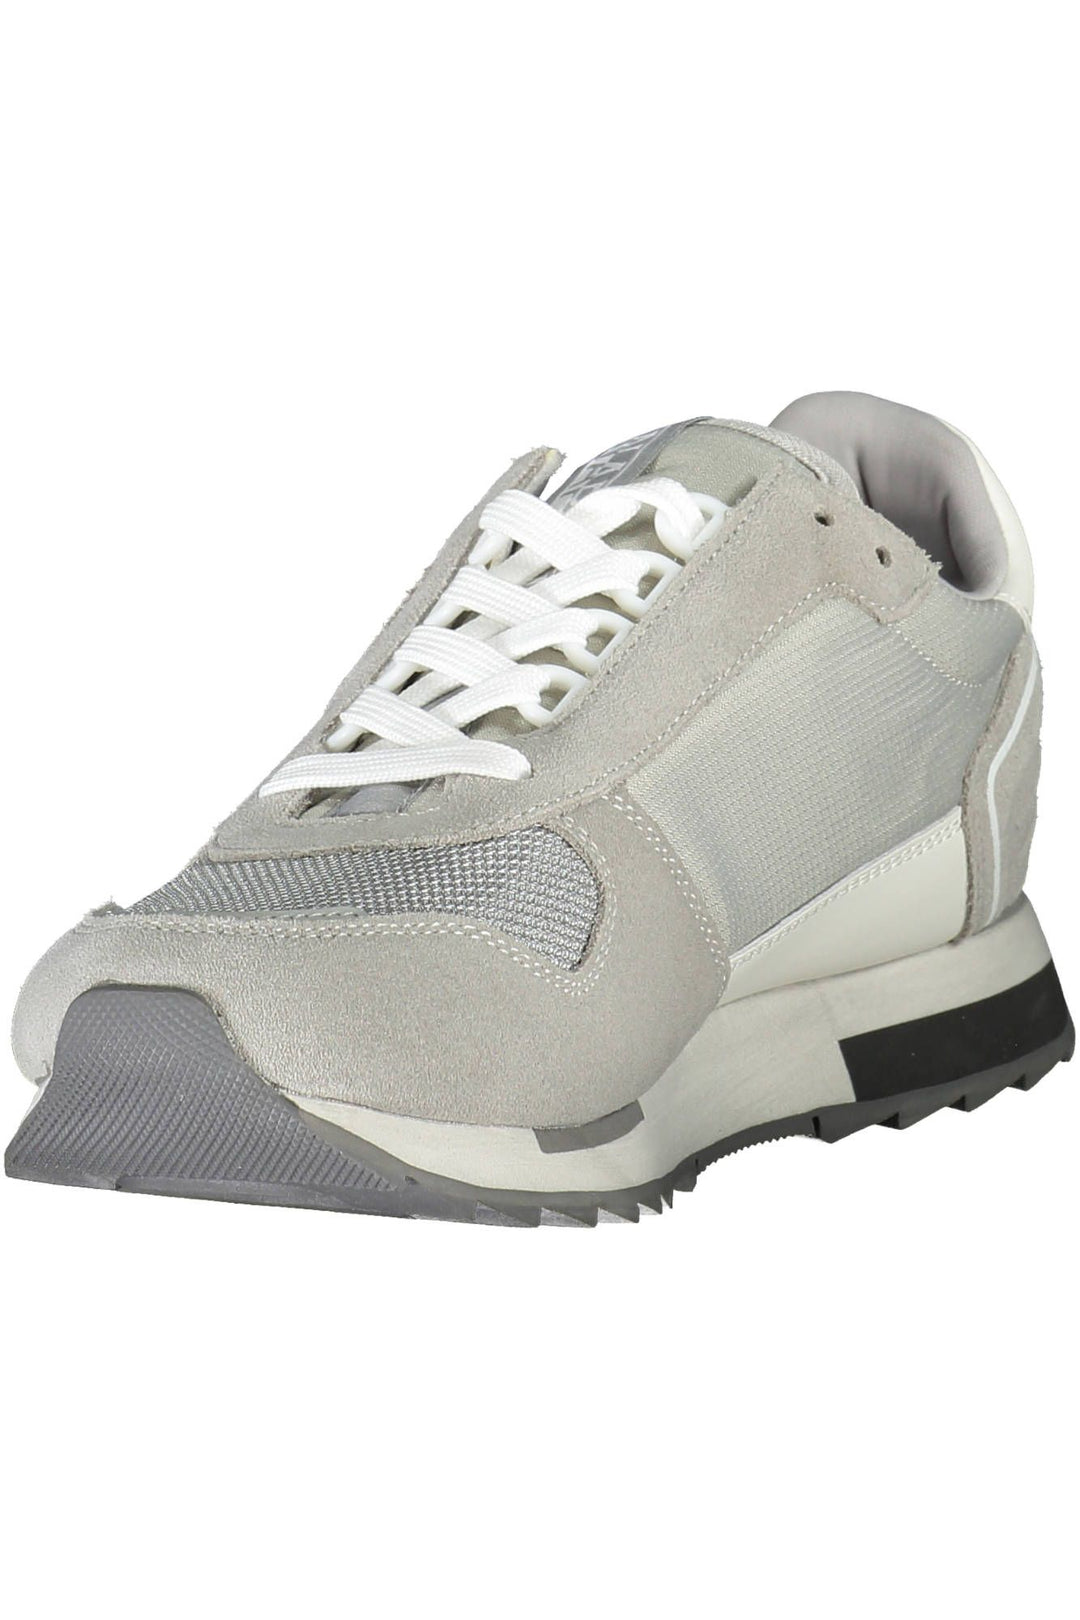 Napapijri Gray Contrast Lace-Up Sneakers